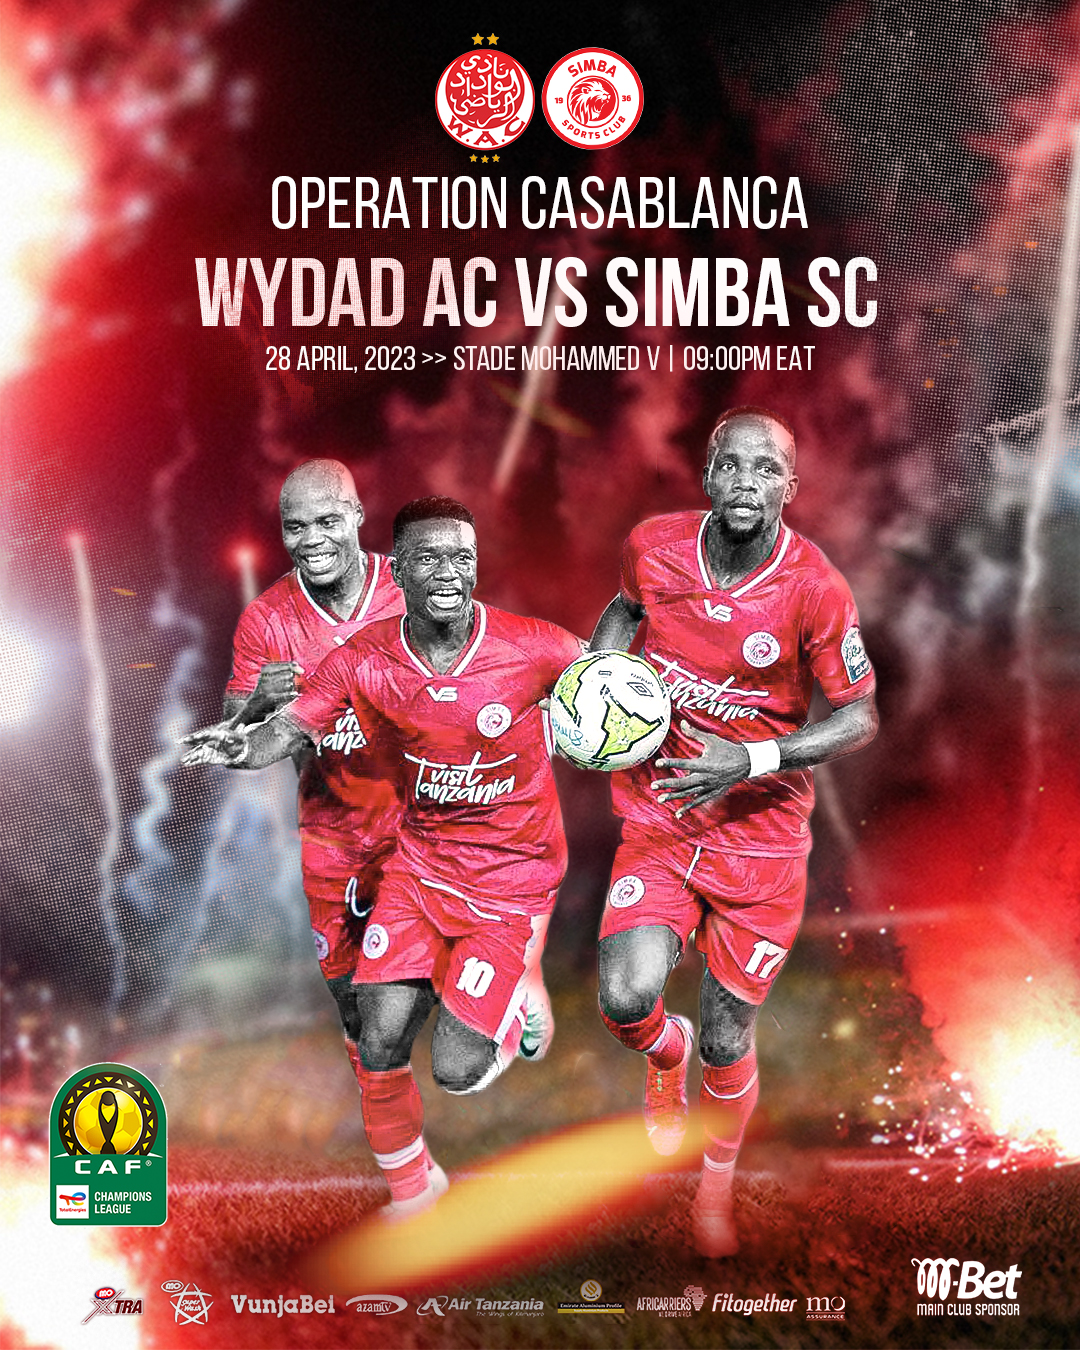 Kikosi Cha Simba Vs Wydad AC on Apr 28, 2023 in CAF Champions League.